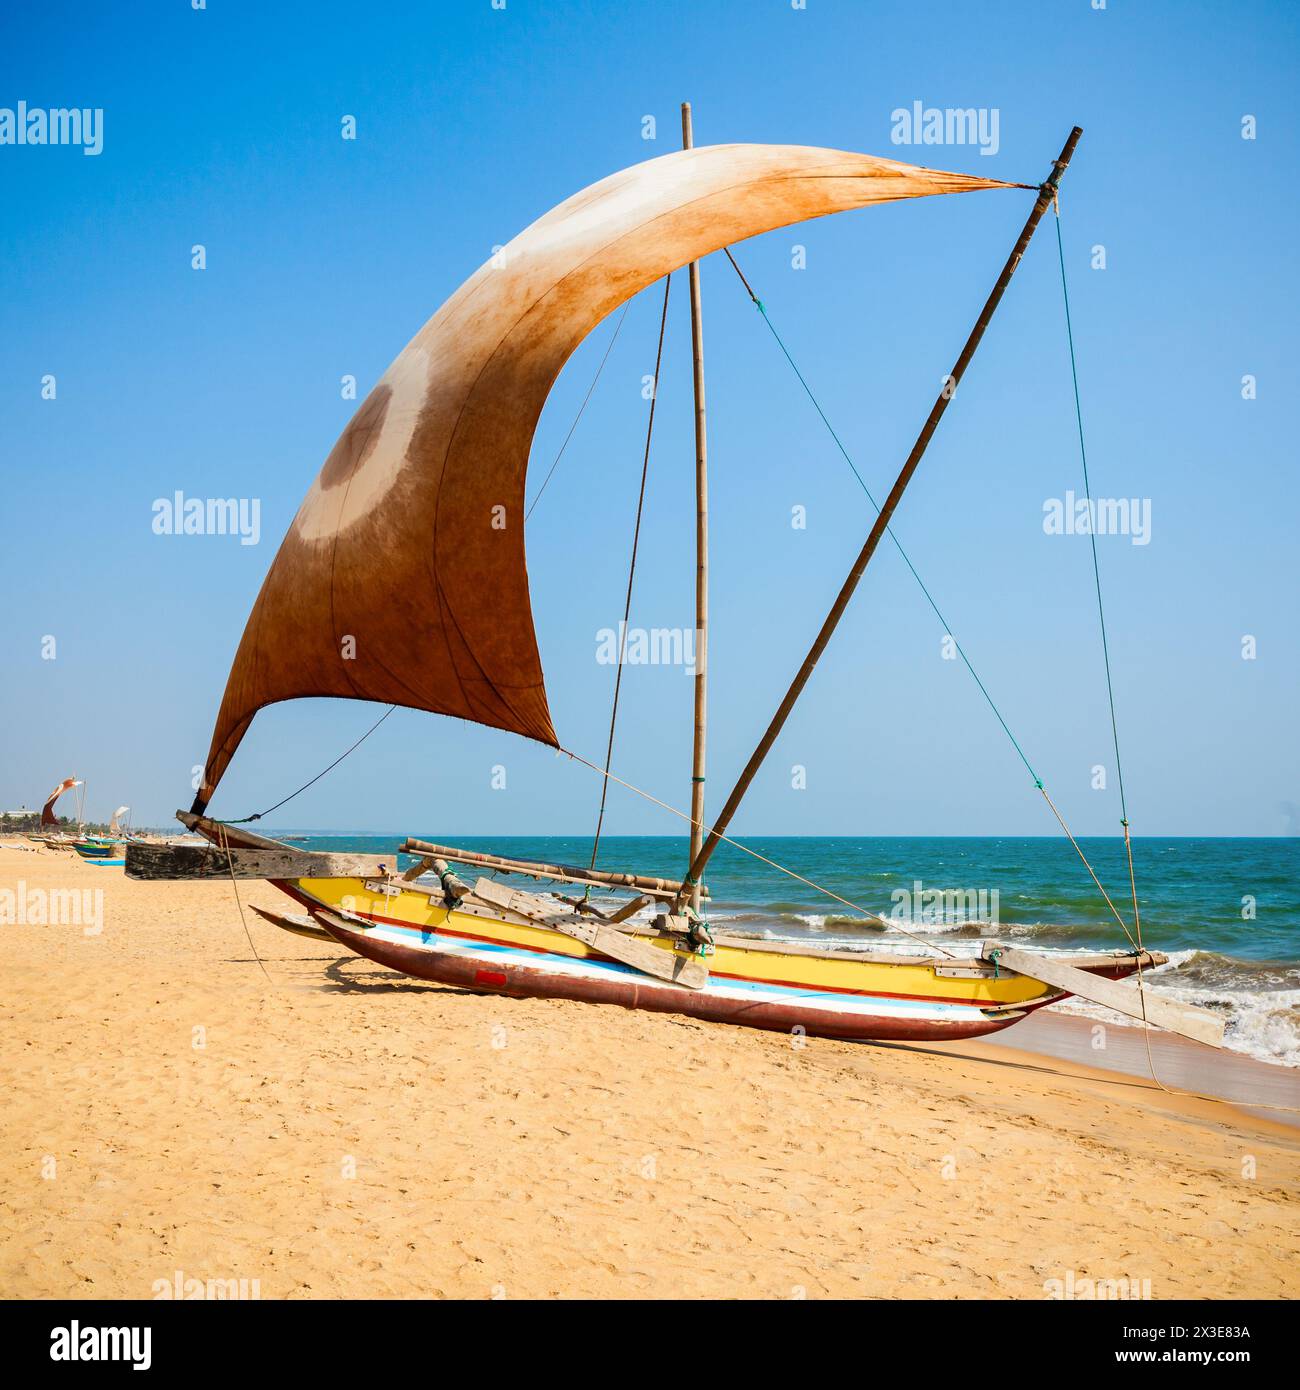 Beauty tourist boat at Negombo beach. Negombo is a major city situated on the west coast of Sri Lanka. Stock Photo